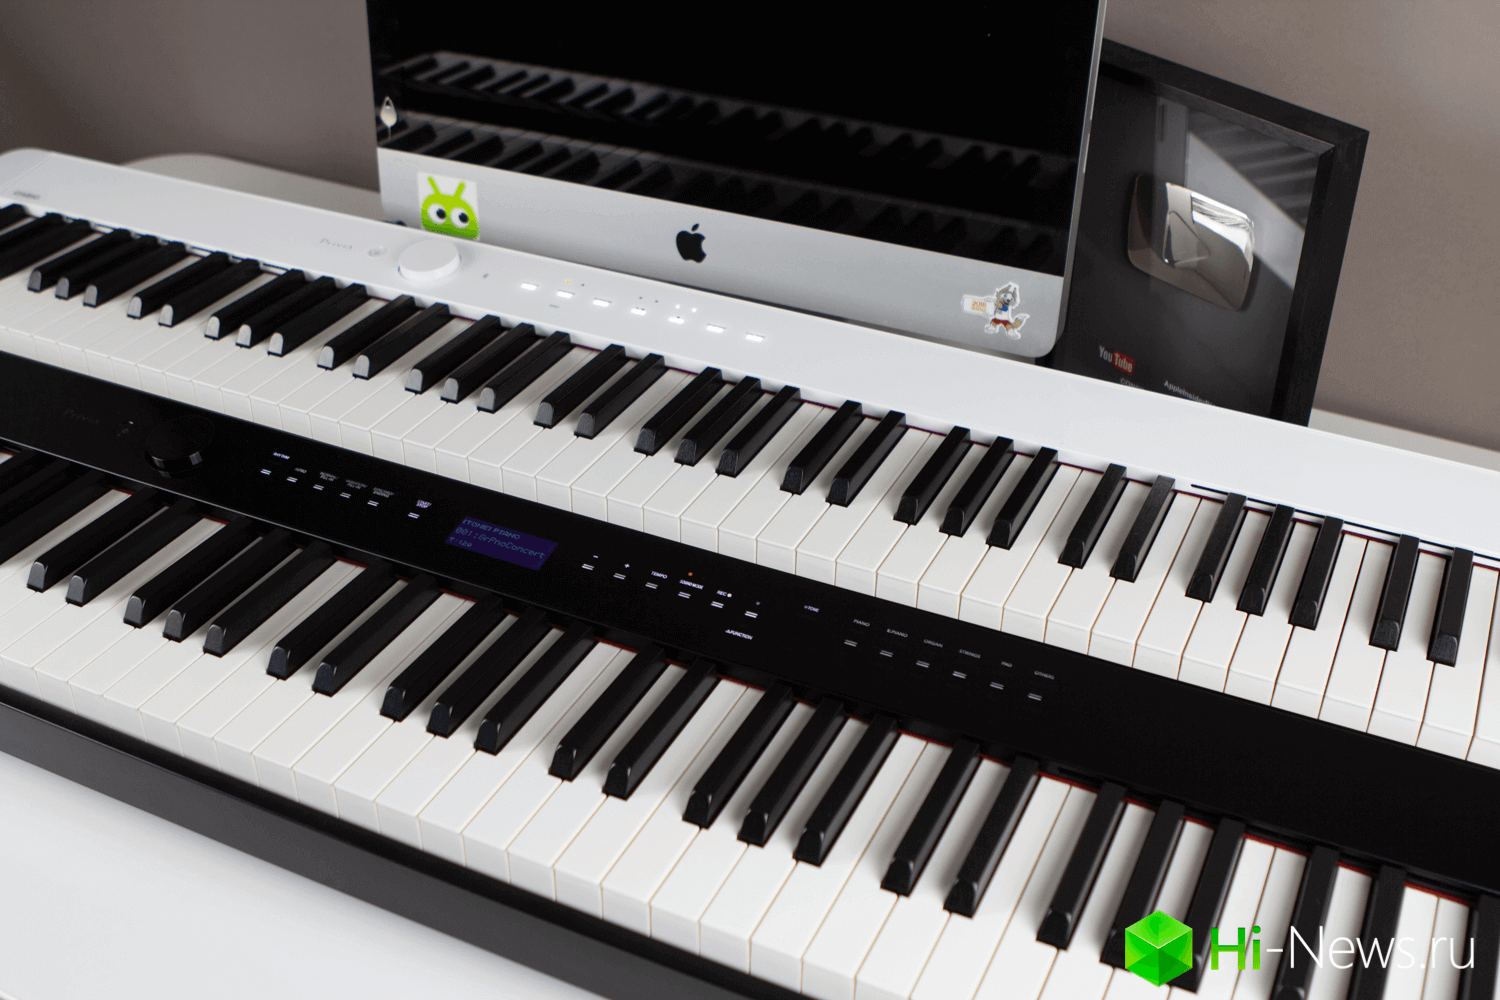 Oyun en kompakt ve teknolojik piyano. Hatta Bluetooth